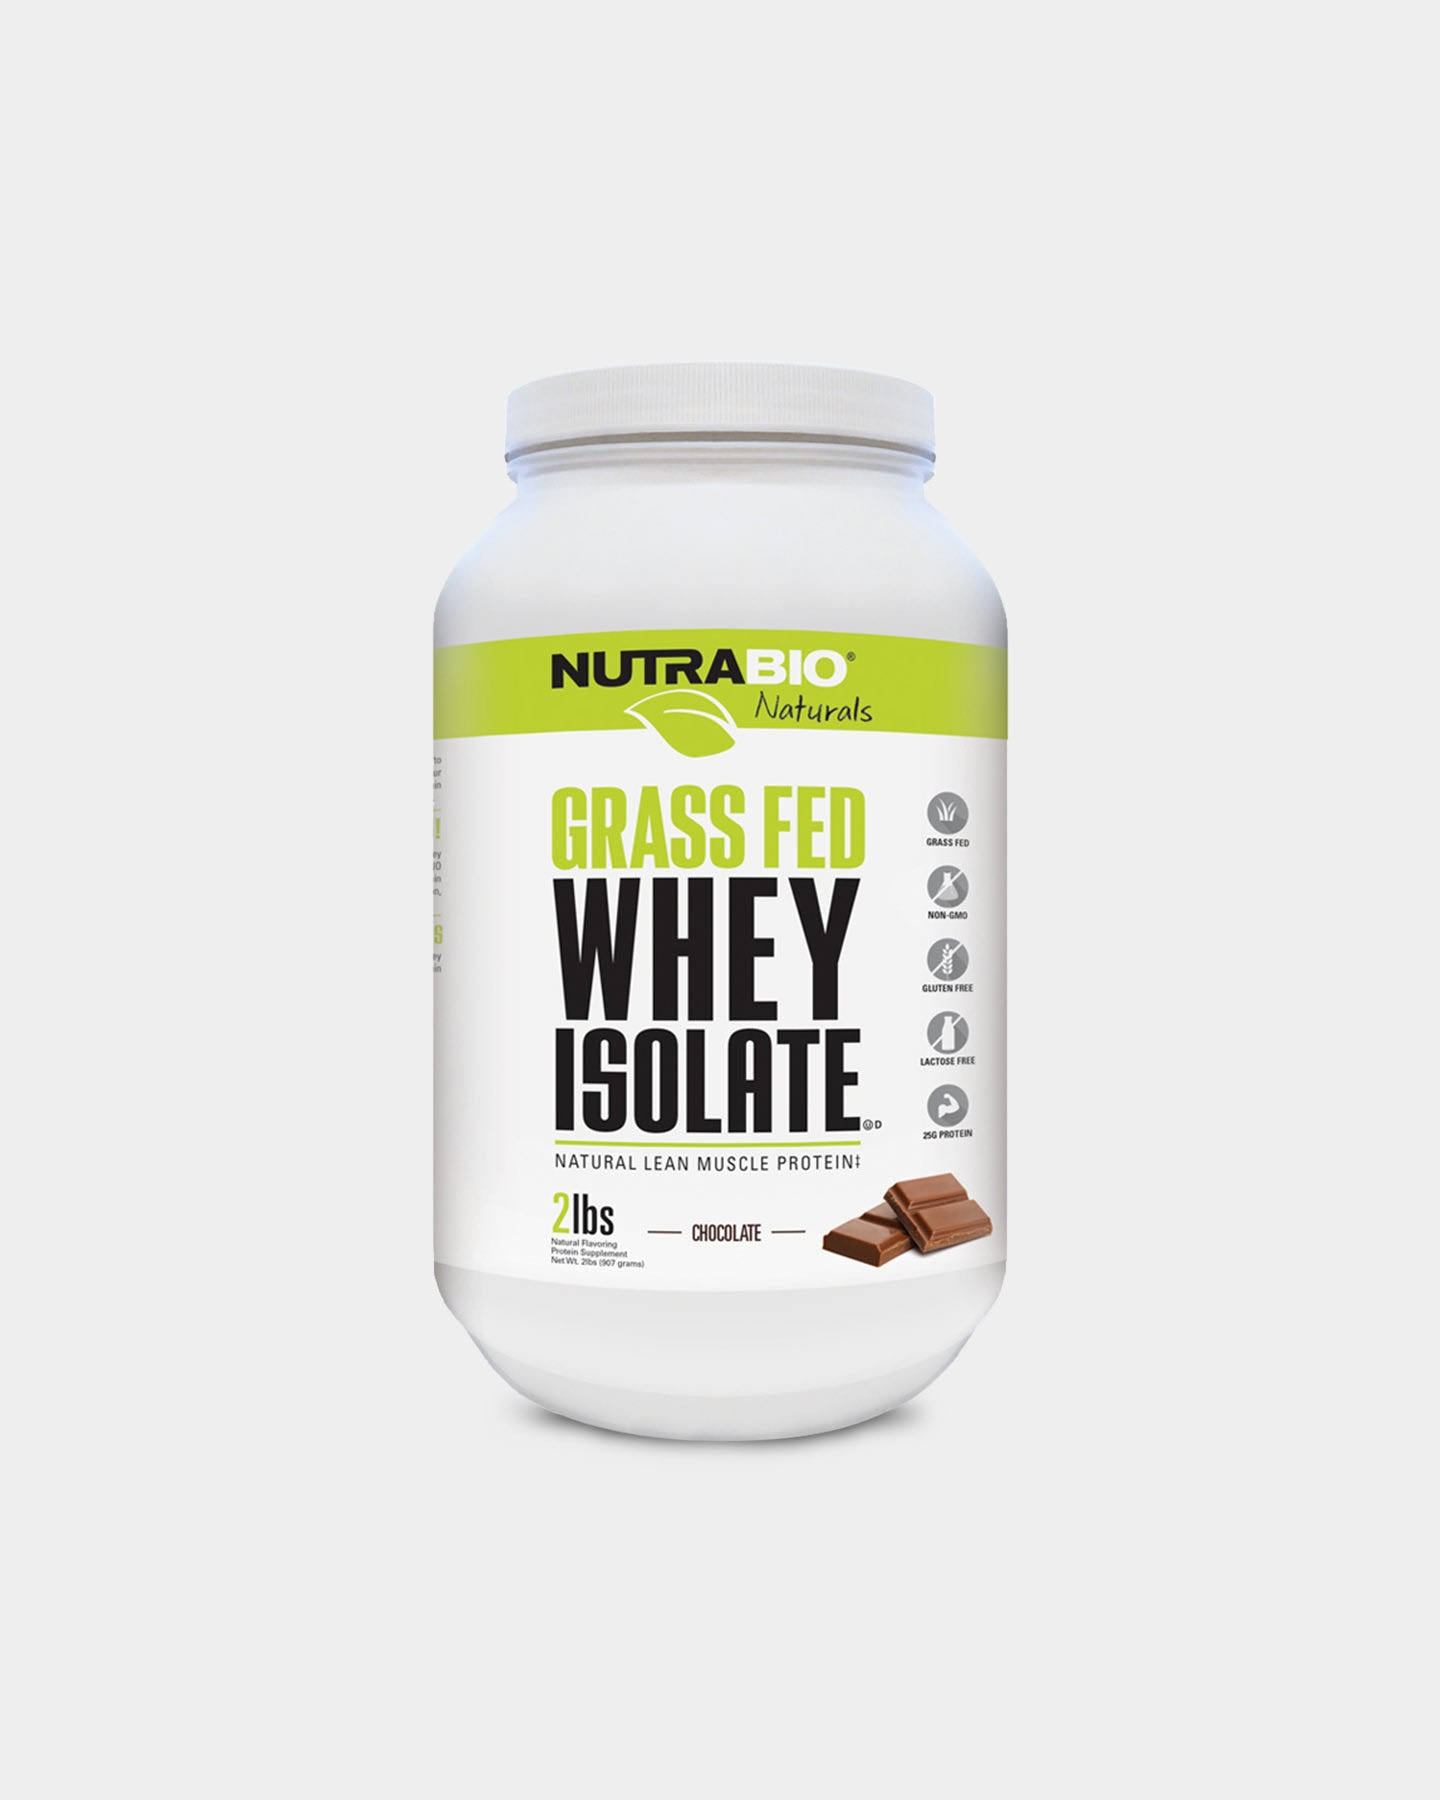 Nutrabio Whey Protein Isolate - Chocolate